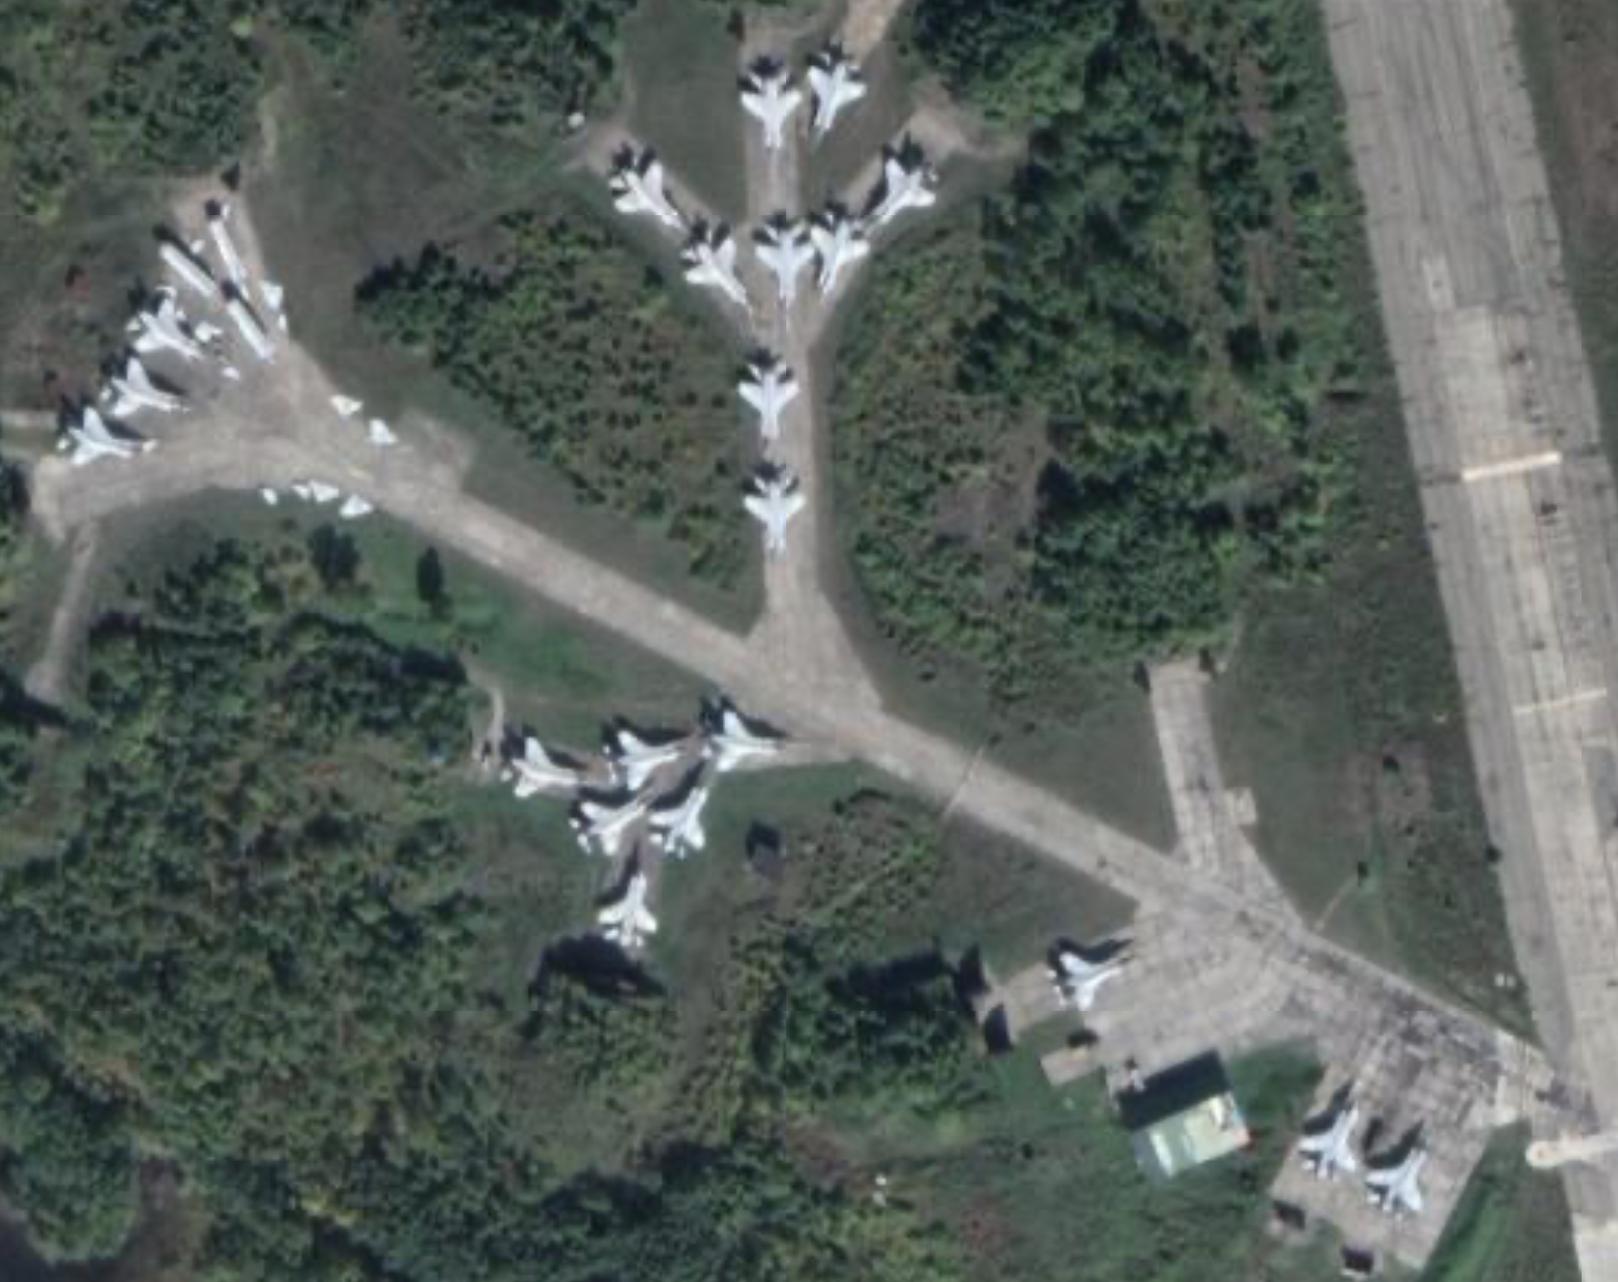 MiG 31s in front of hangars (Google Maps)